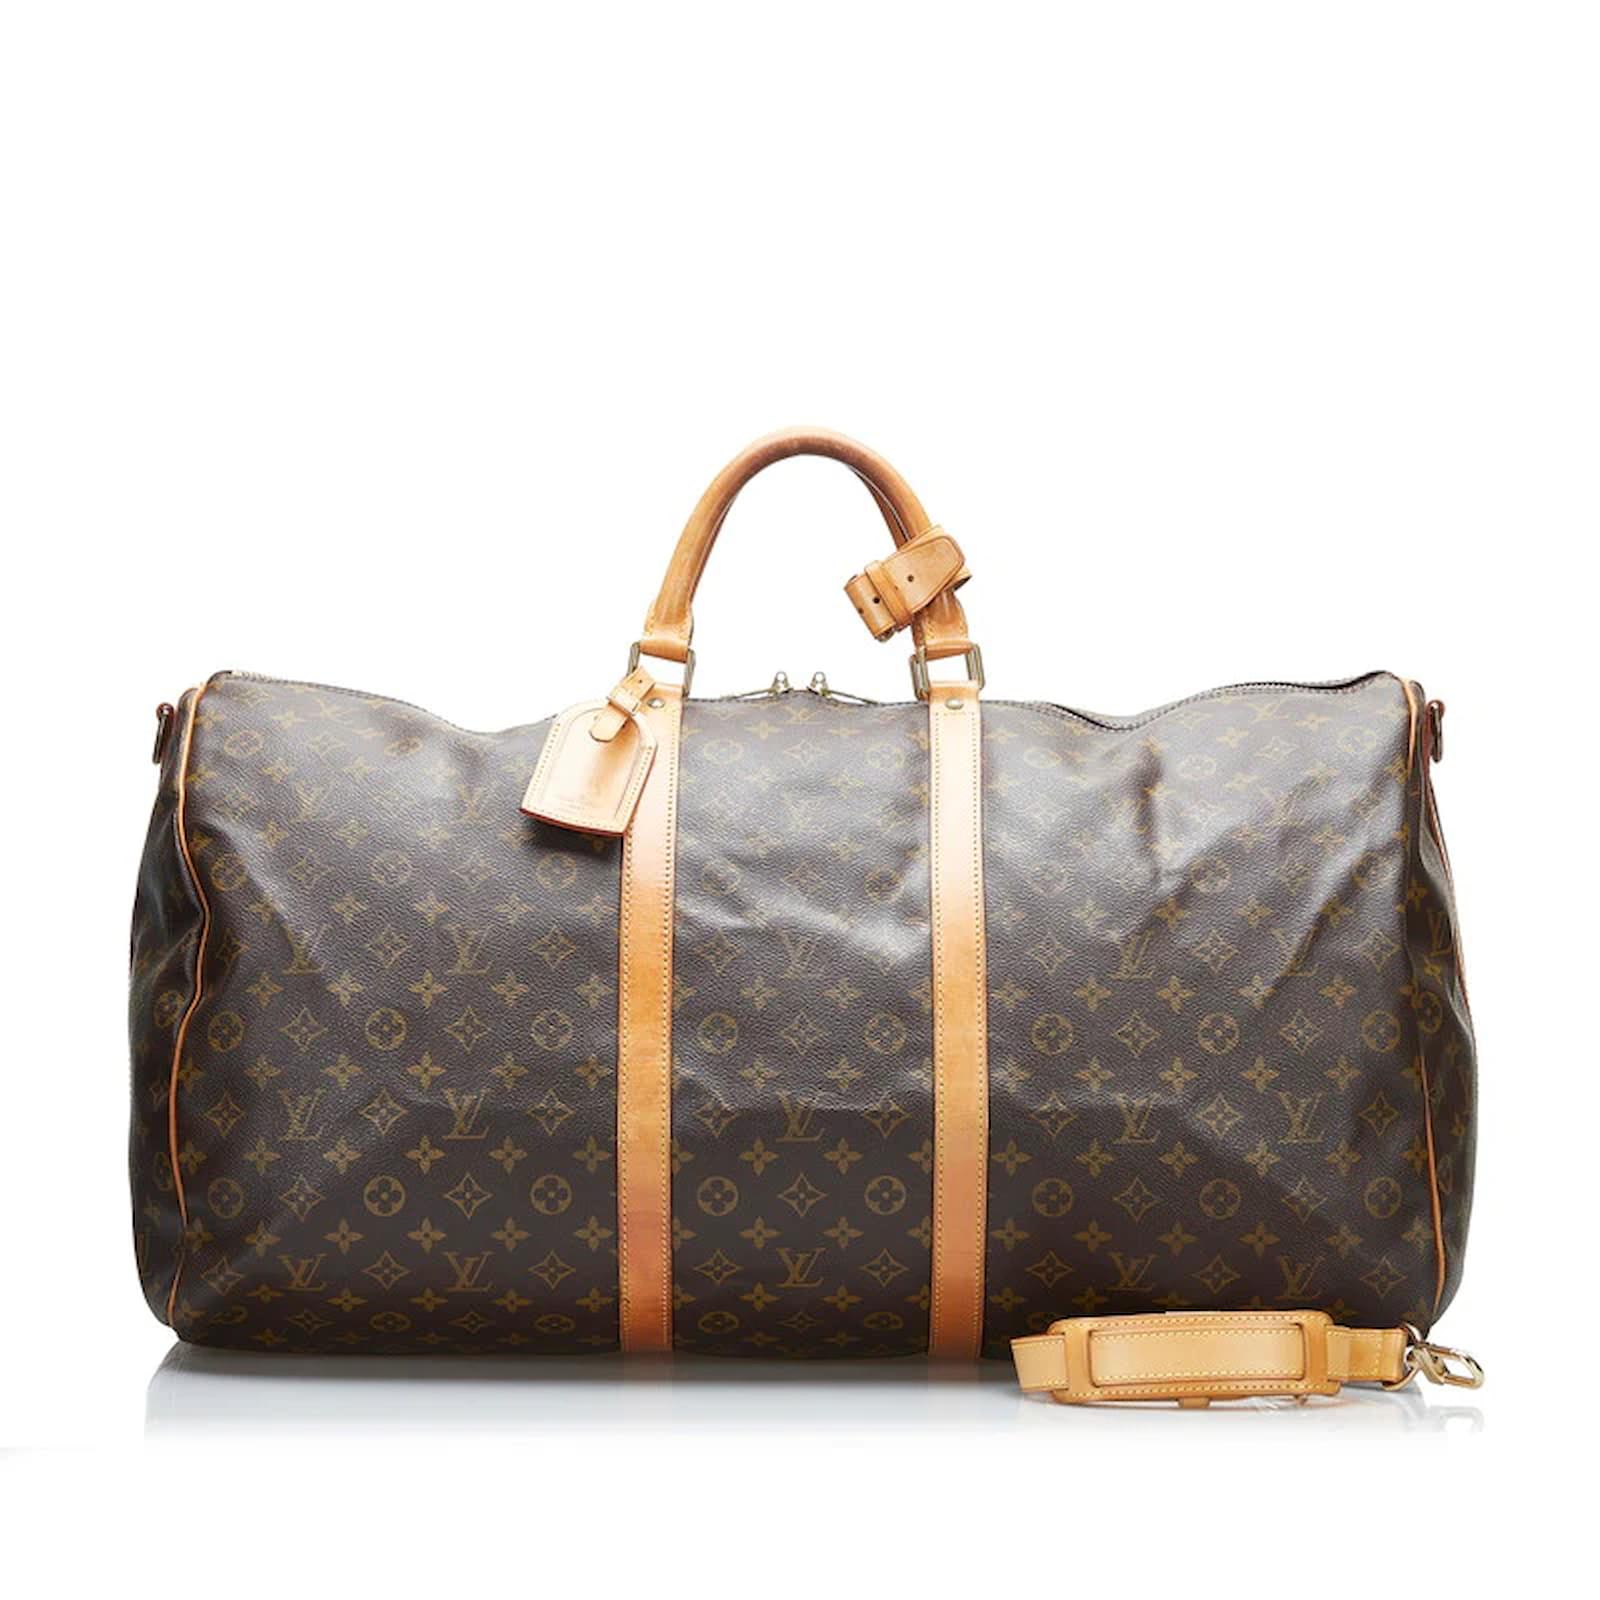 Louis Vuitton Keepall 55 Travel Handbag Purse Monogram M41424